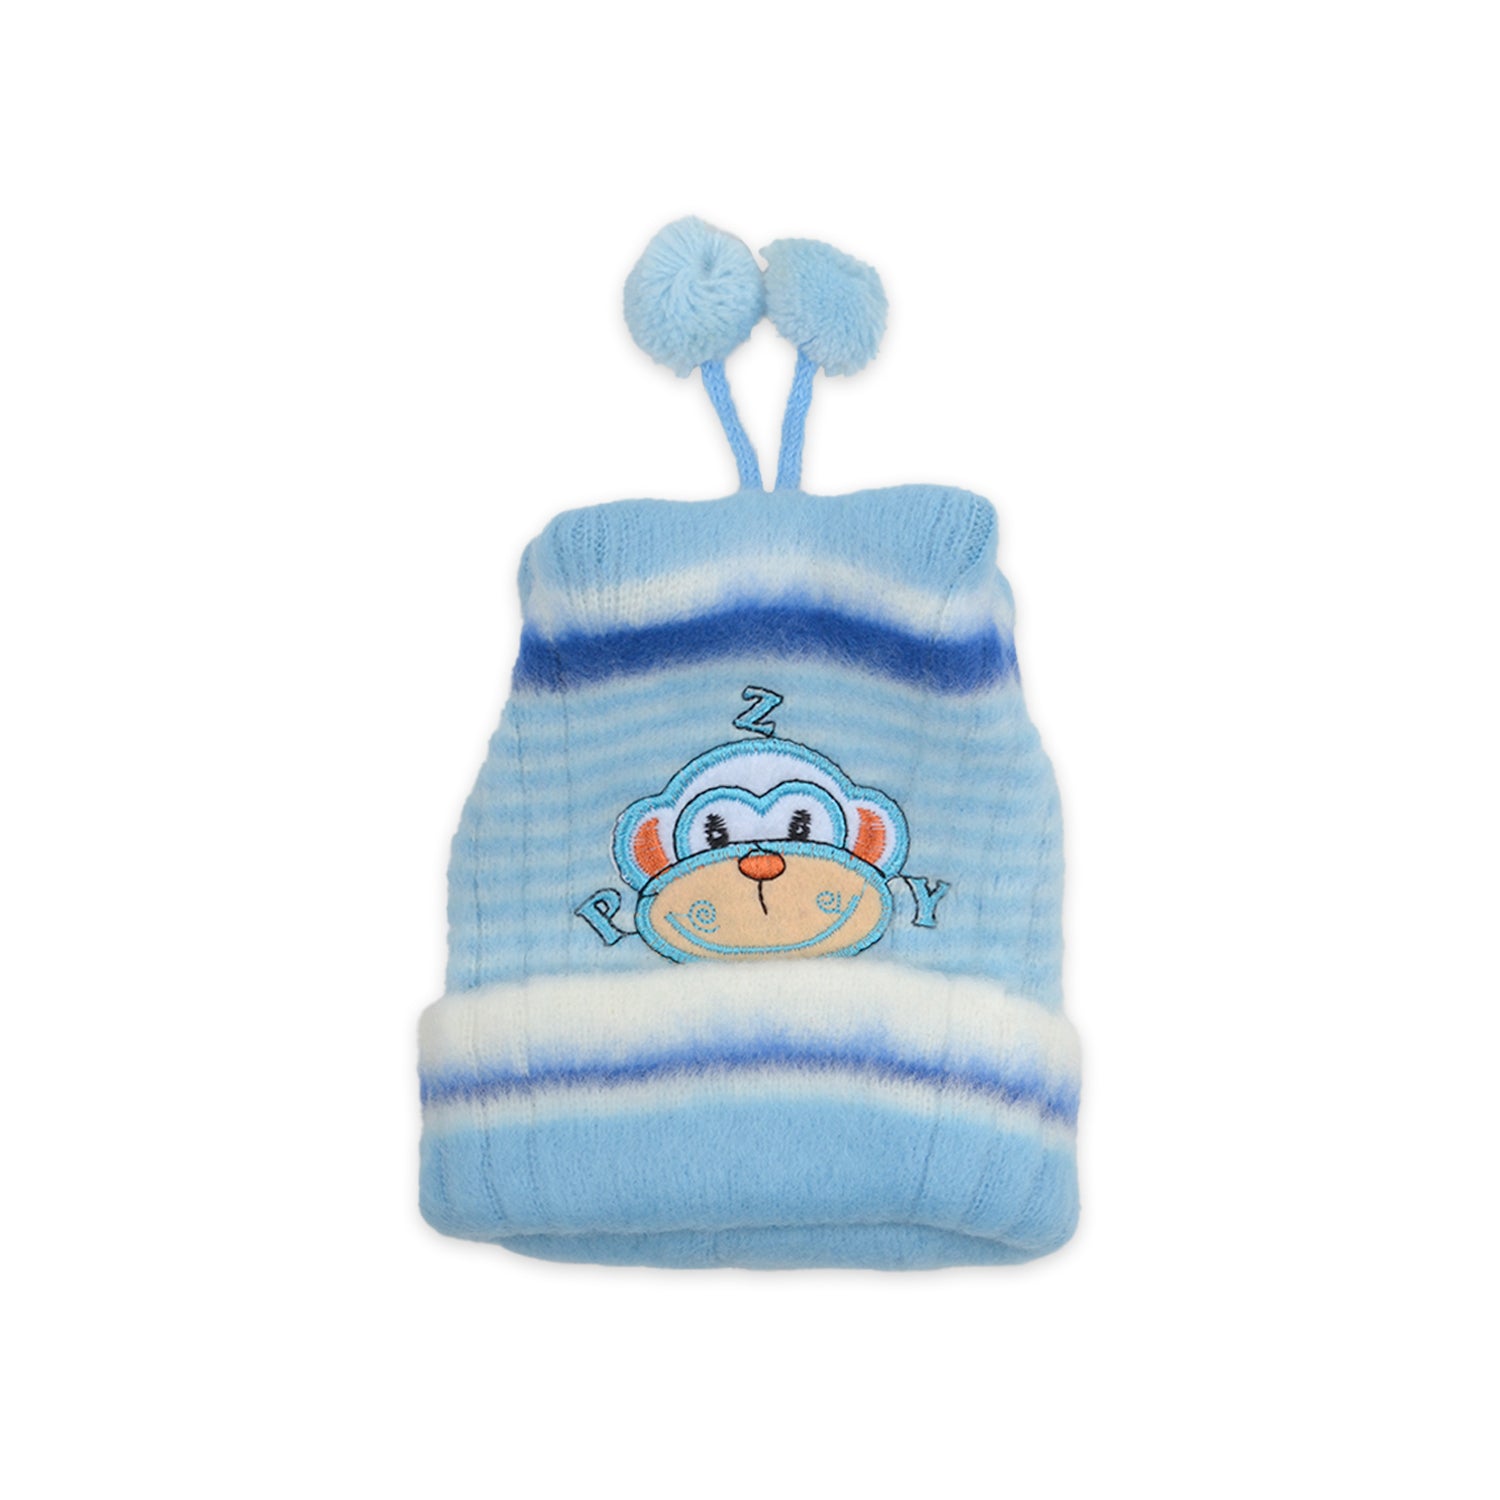 Baby Unisex Woolen Caps | Cream & Sky Blue | Monkey | Pack Of 2